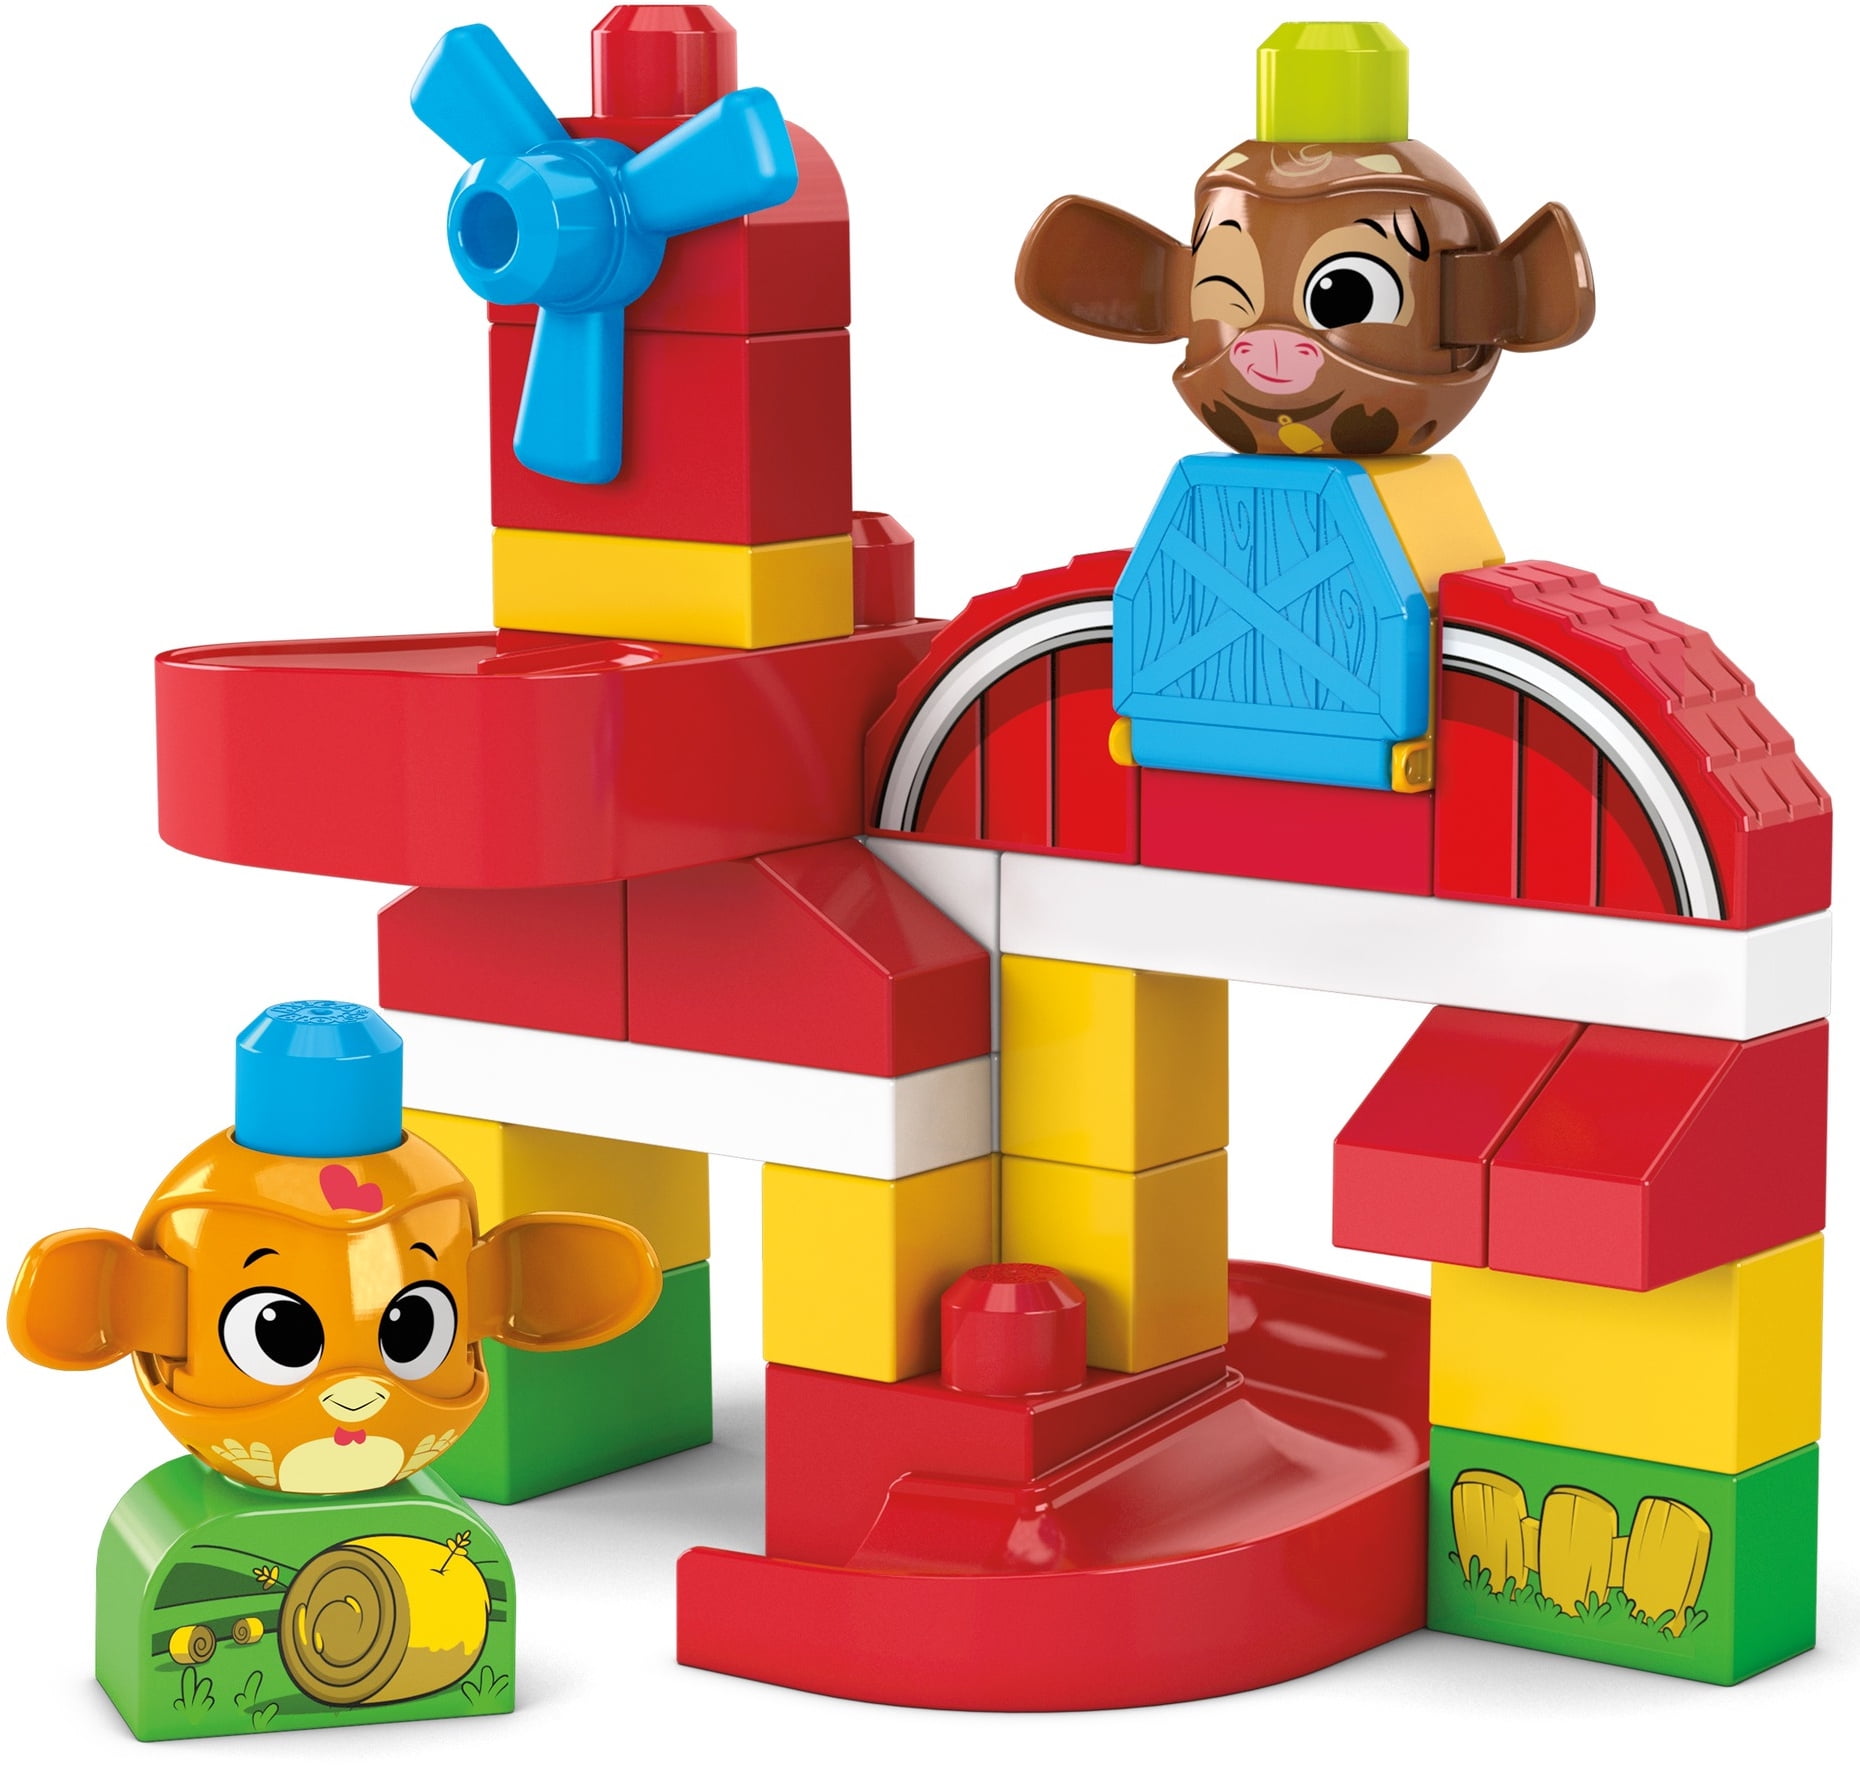 Mega Bloks Peek A Blocks Animal Farm with Big Building Blocks, Building  Toys for Toddler (35 Pieces) 